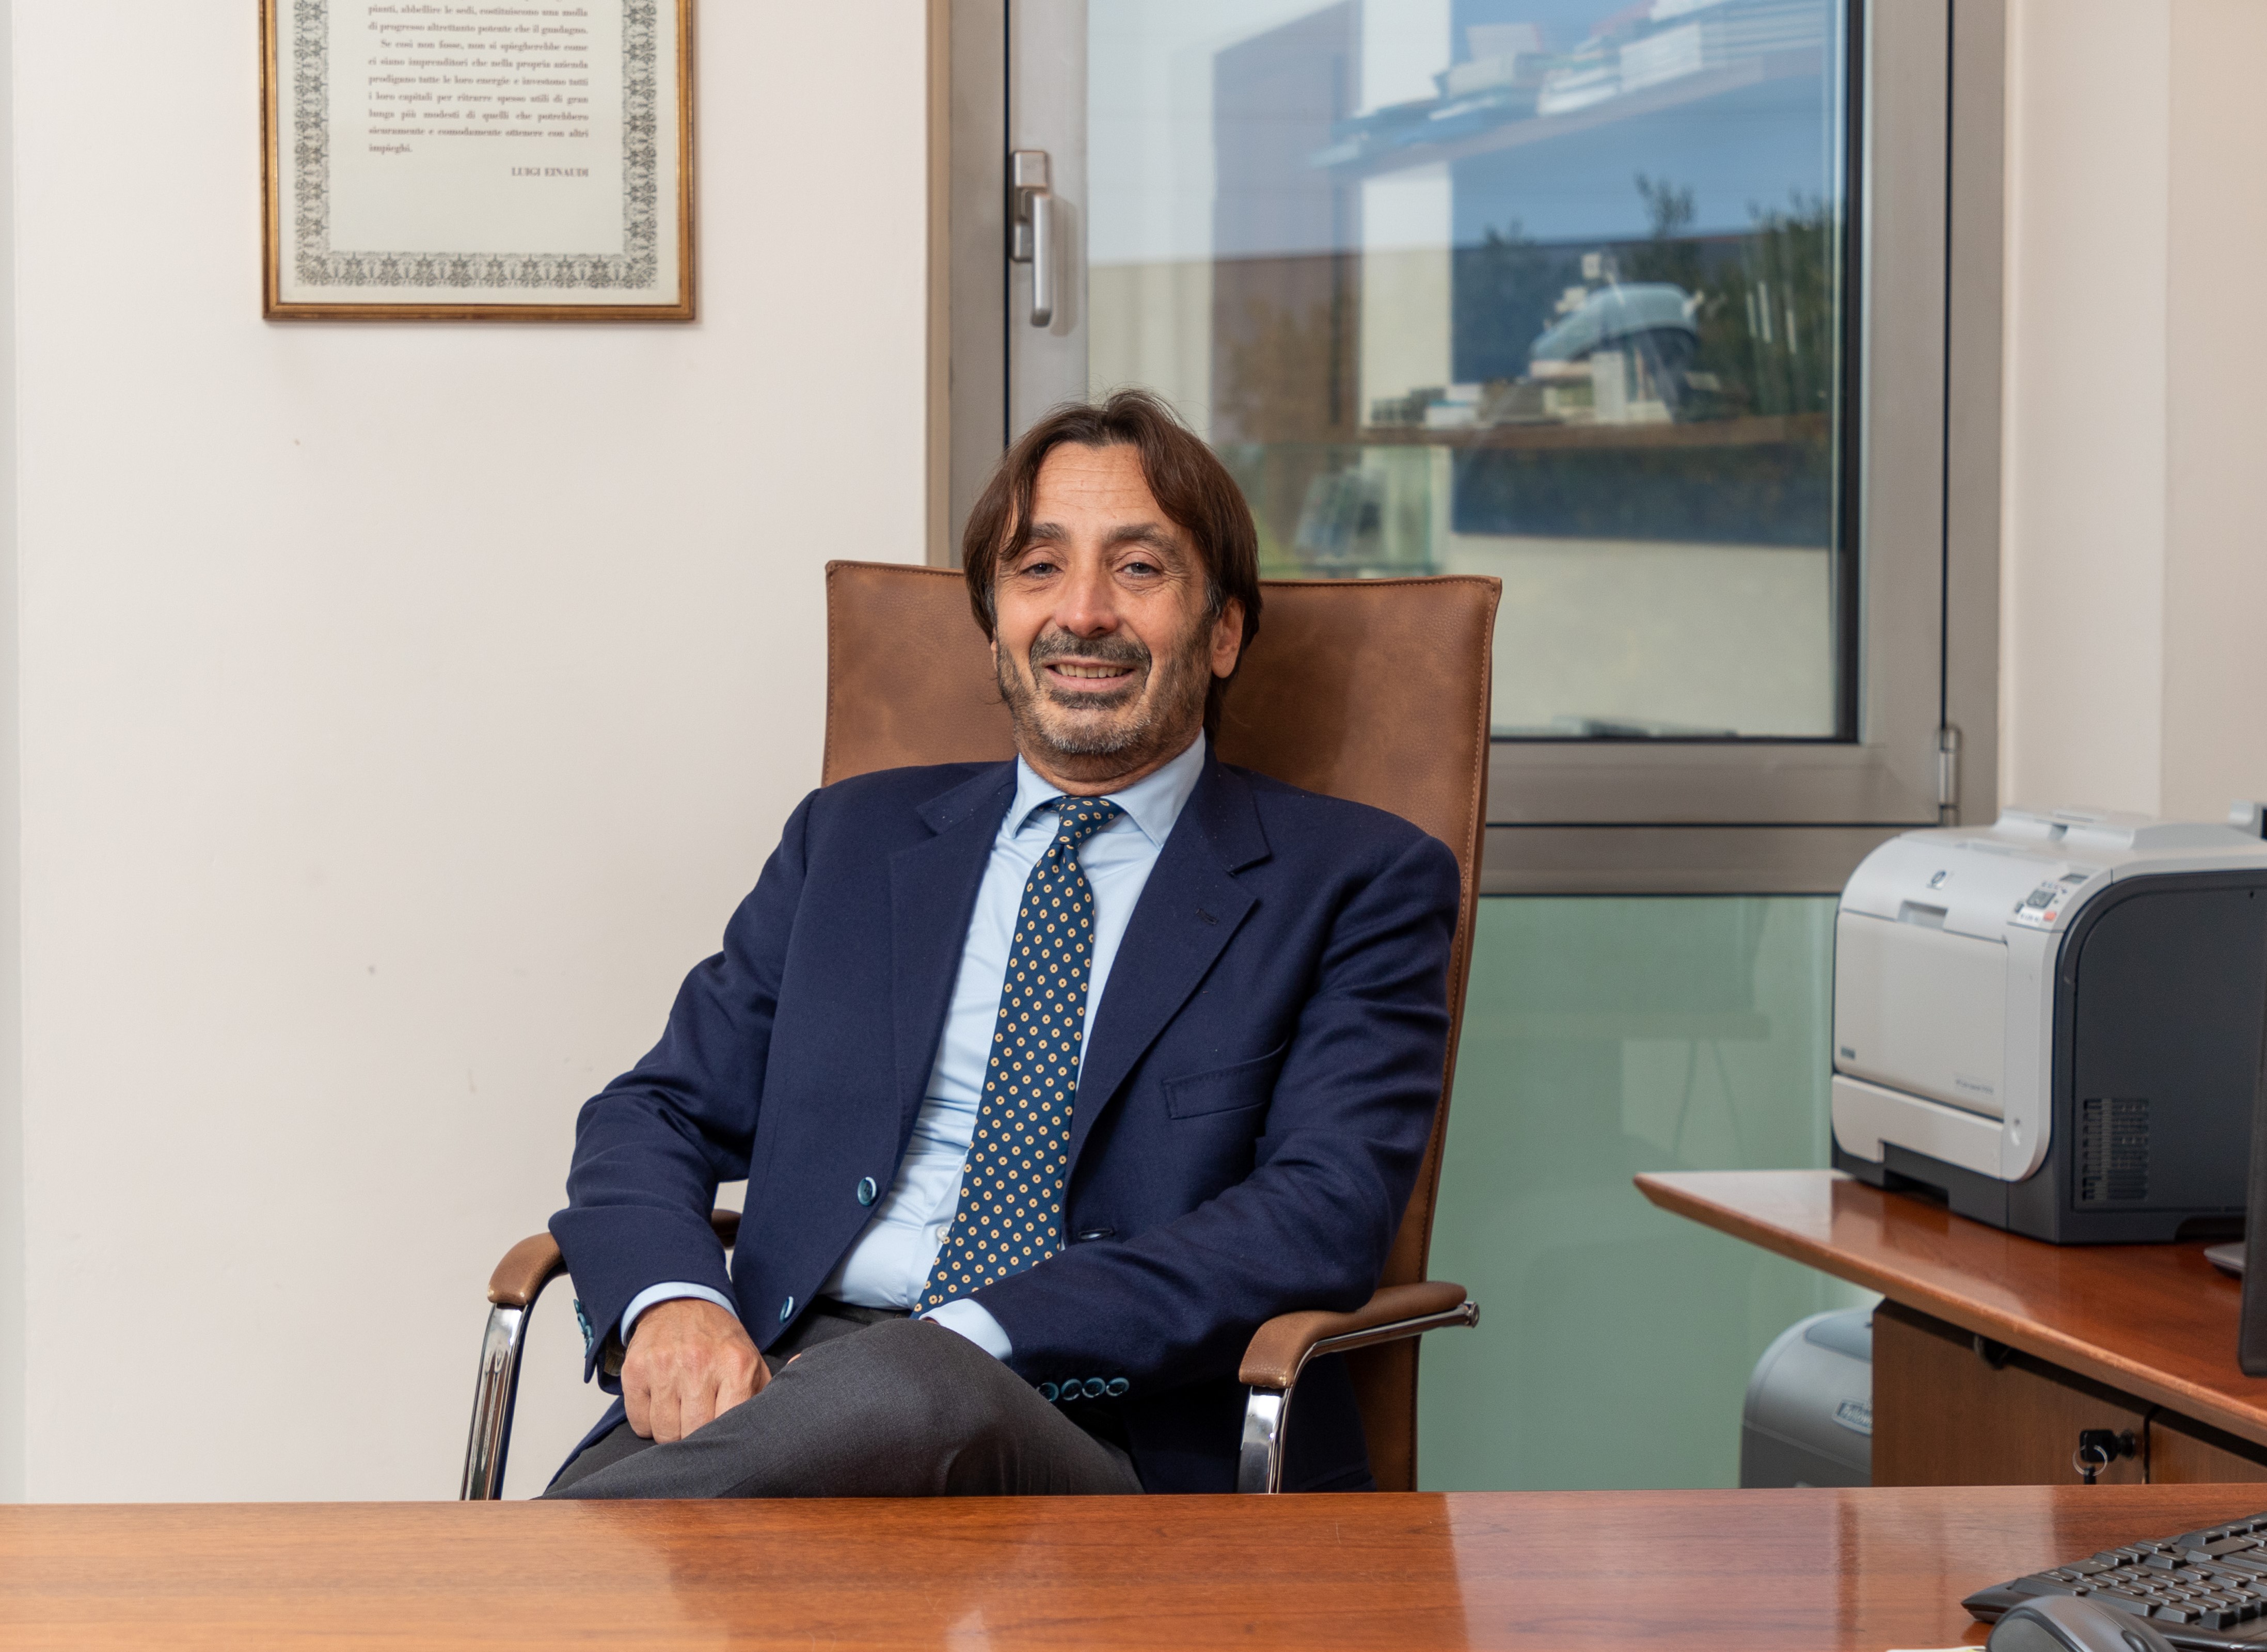 Federico de' Stefani, CEO